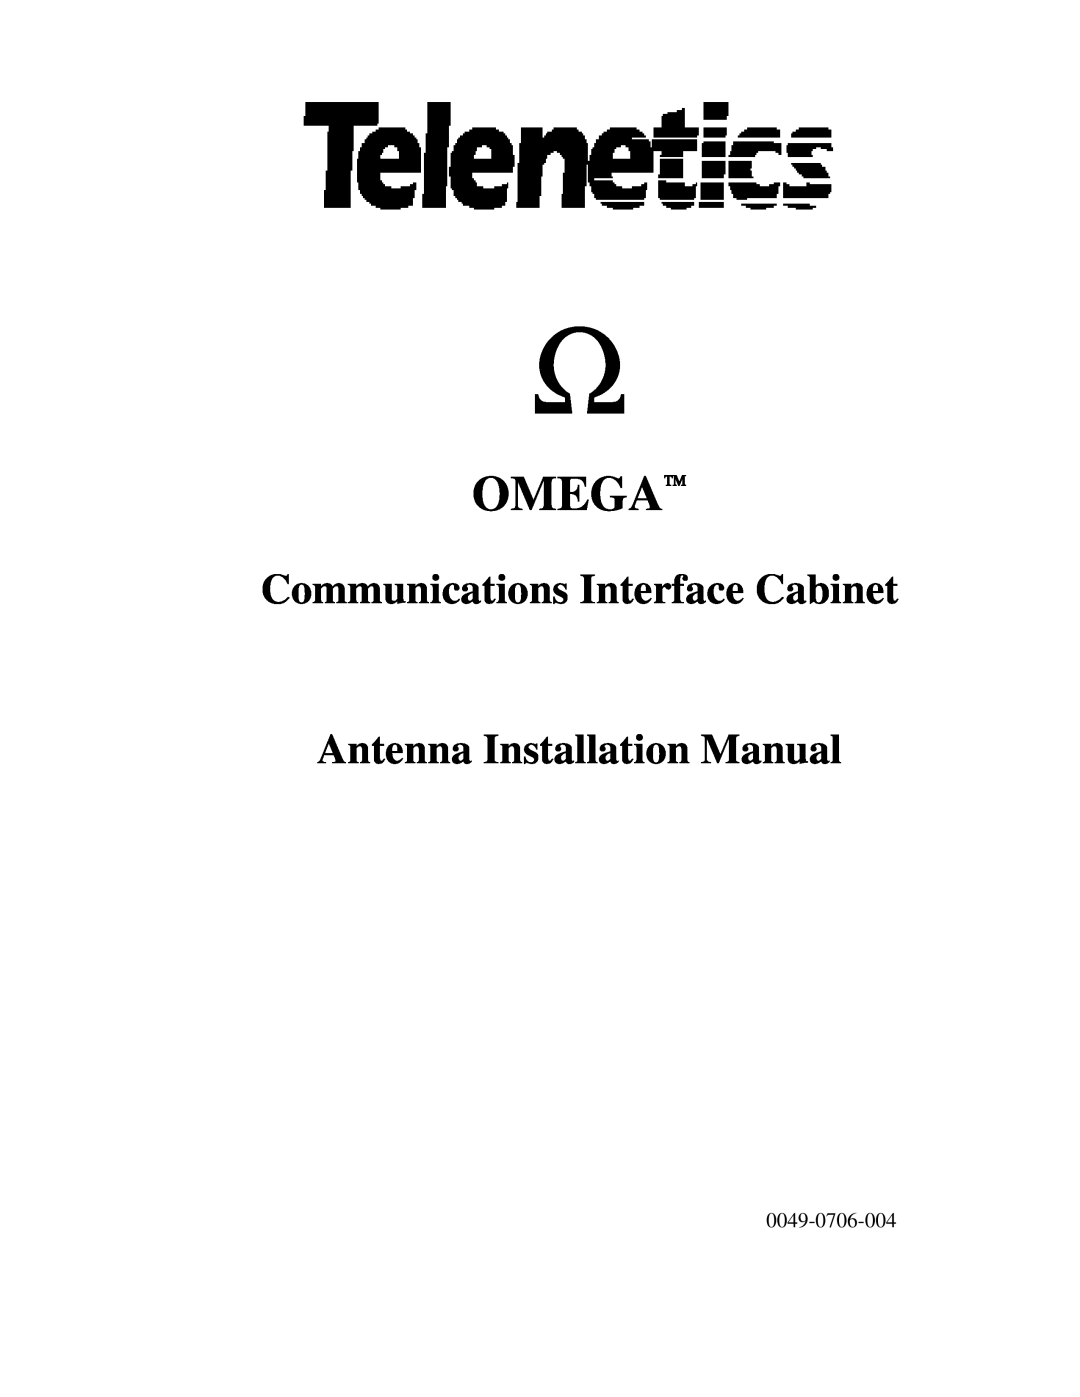 Telenetics Communications and Interface Cabinet Antenna installation manual Omega, Communications Interface Cabinet 